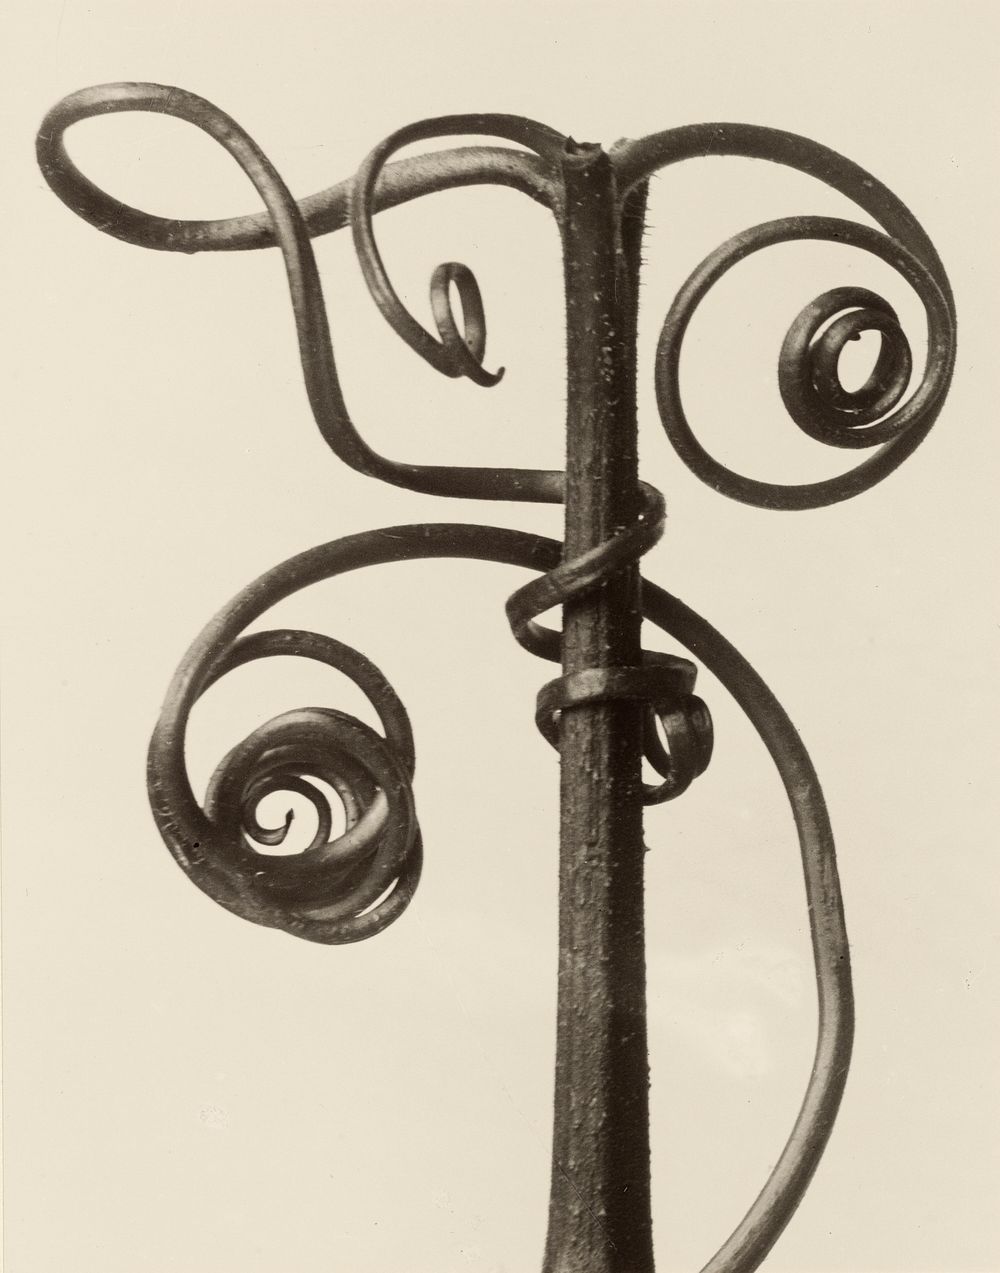 Cucurbita by Karl Blossfeldt (1865-1932)